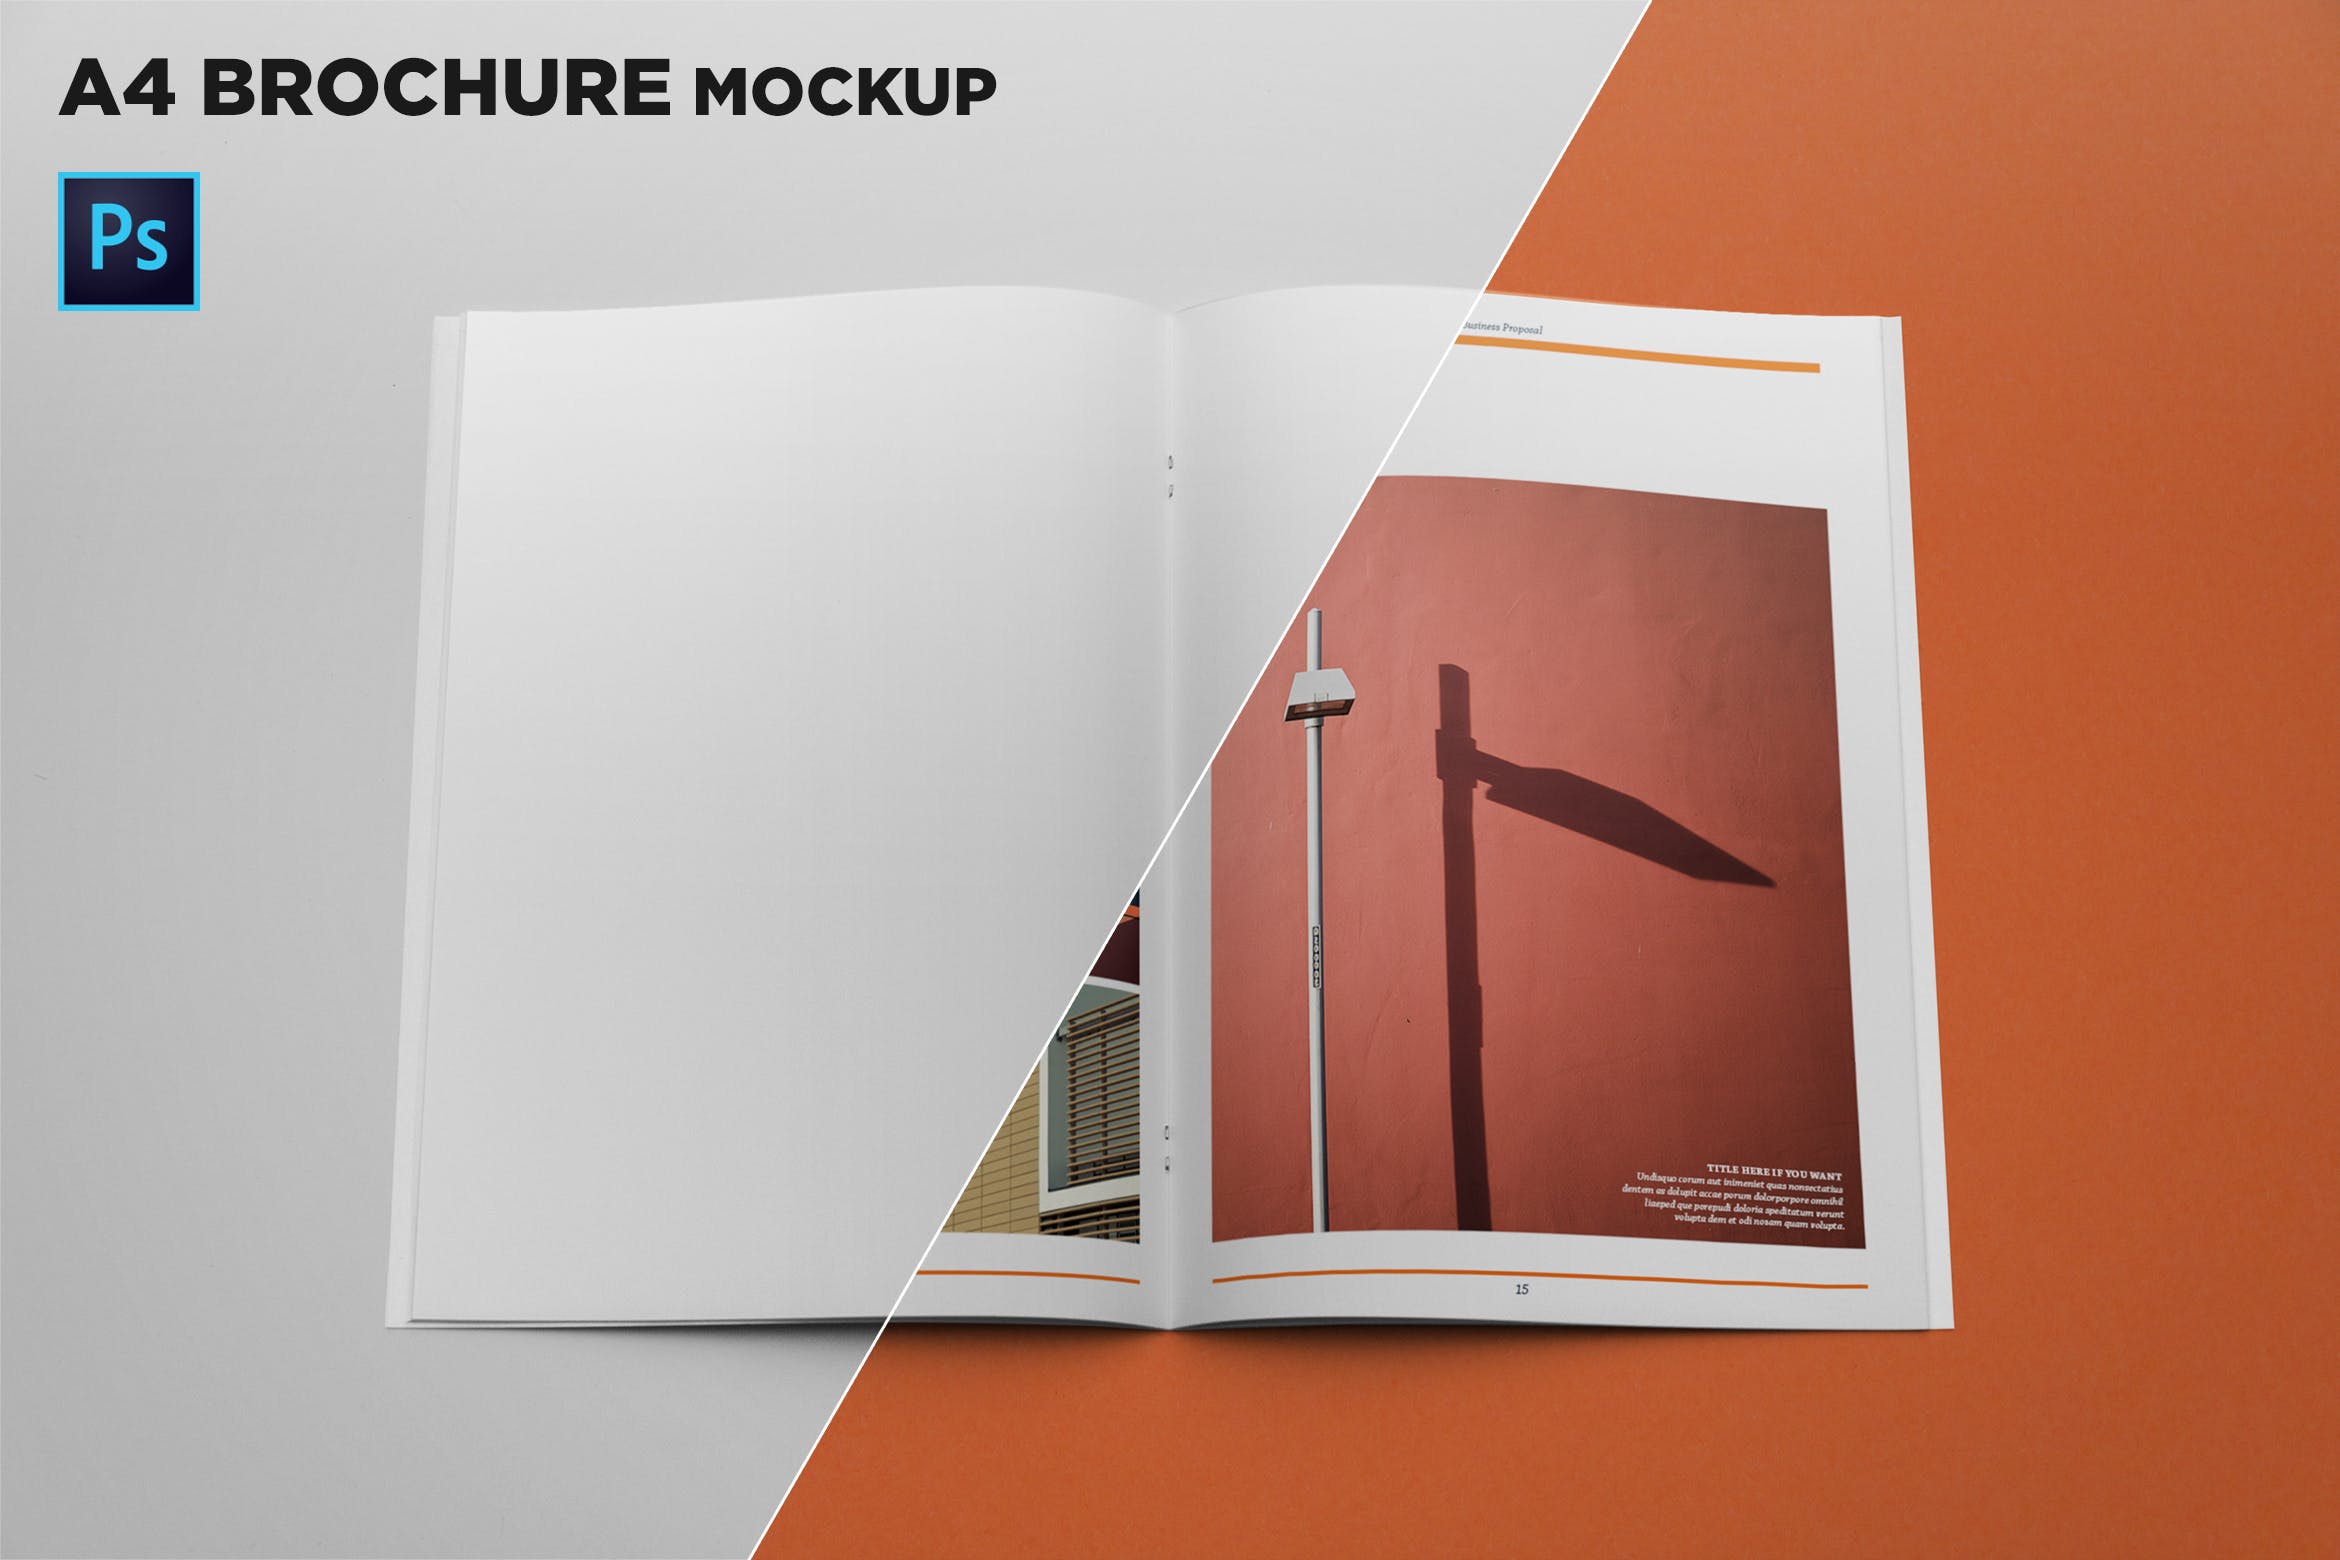 A4宣传小册子/企业画册内页设计顶视图样机非凡图库精选 A4 Brochure Mockup Top View插图